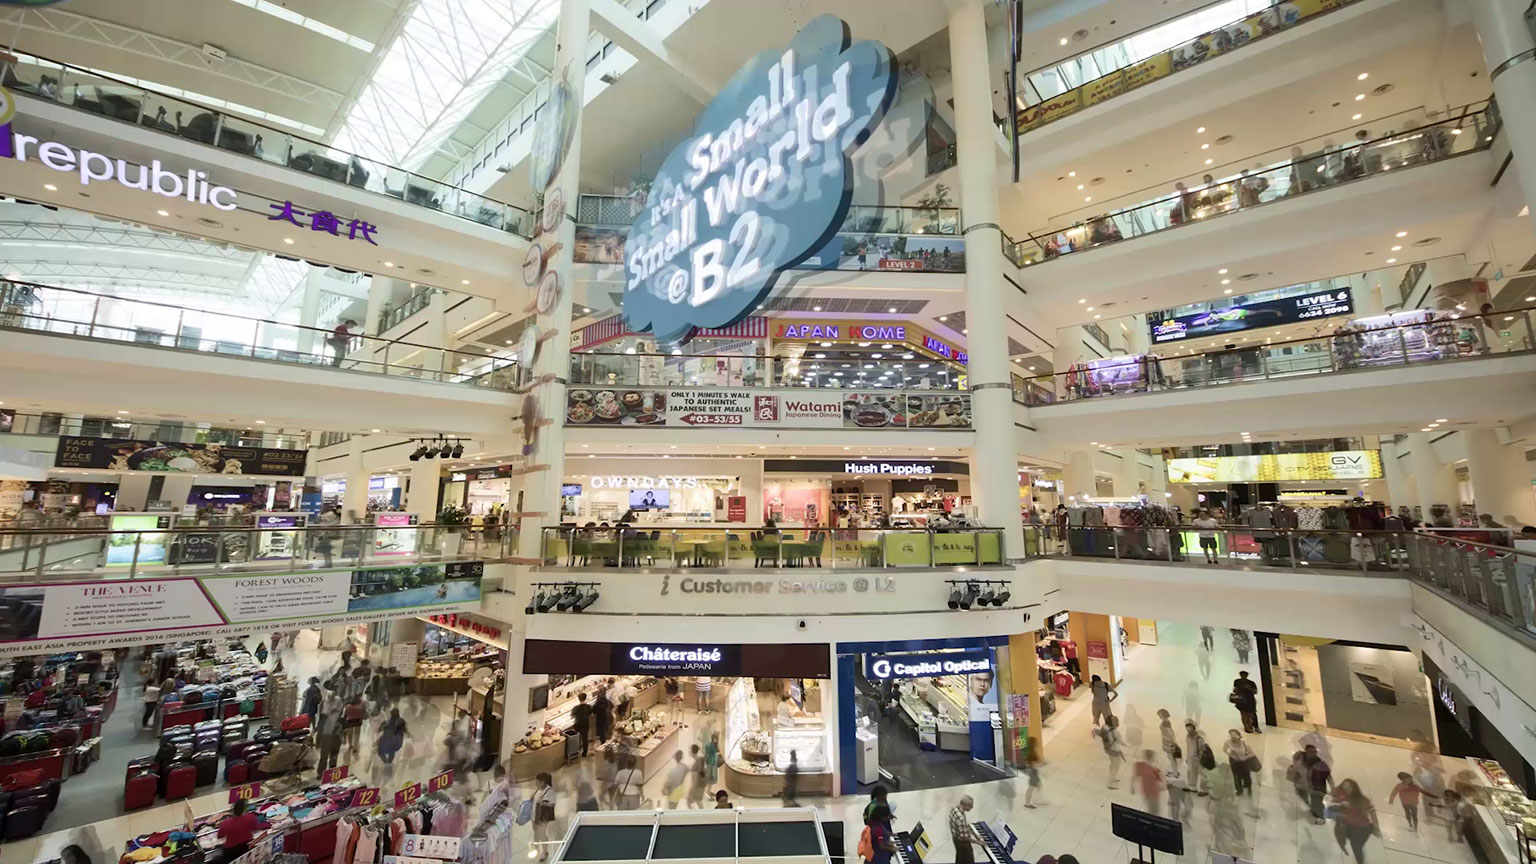 City Square Mall | An award-winning mall on Kitchener Road